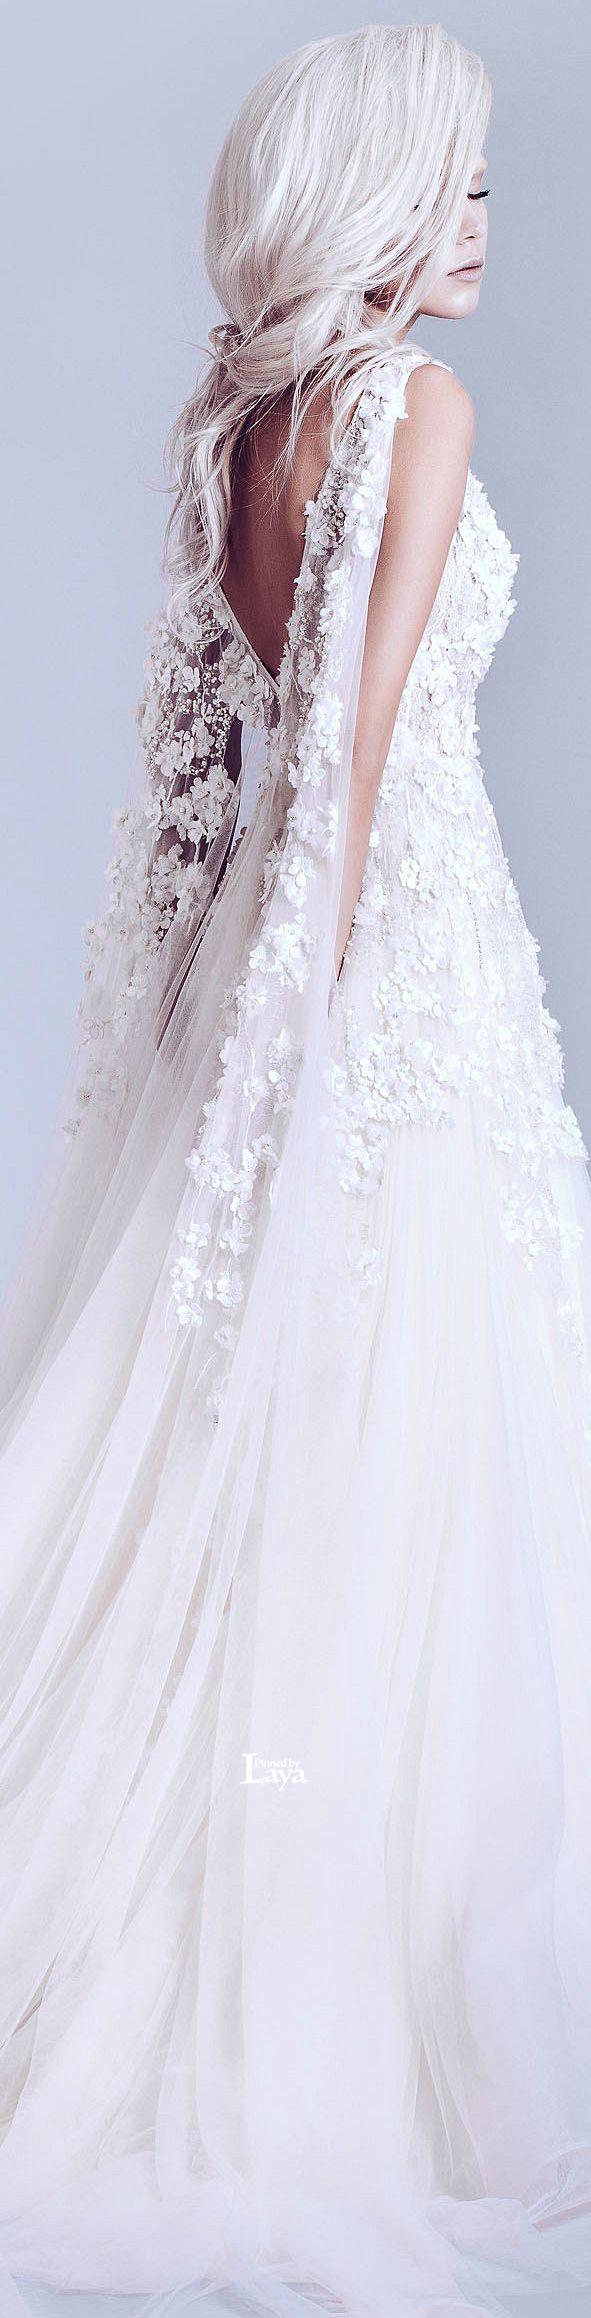 زفاف - Chiffon Dress